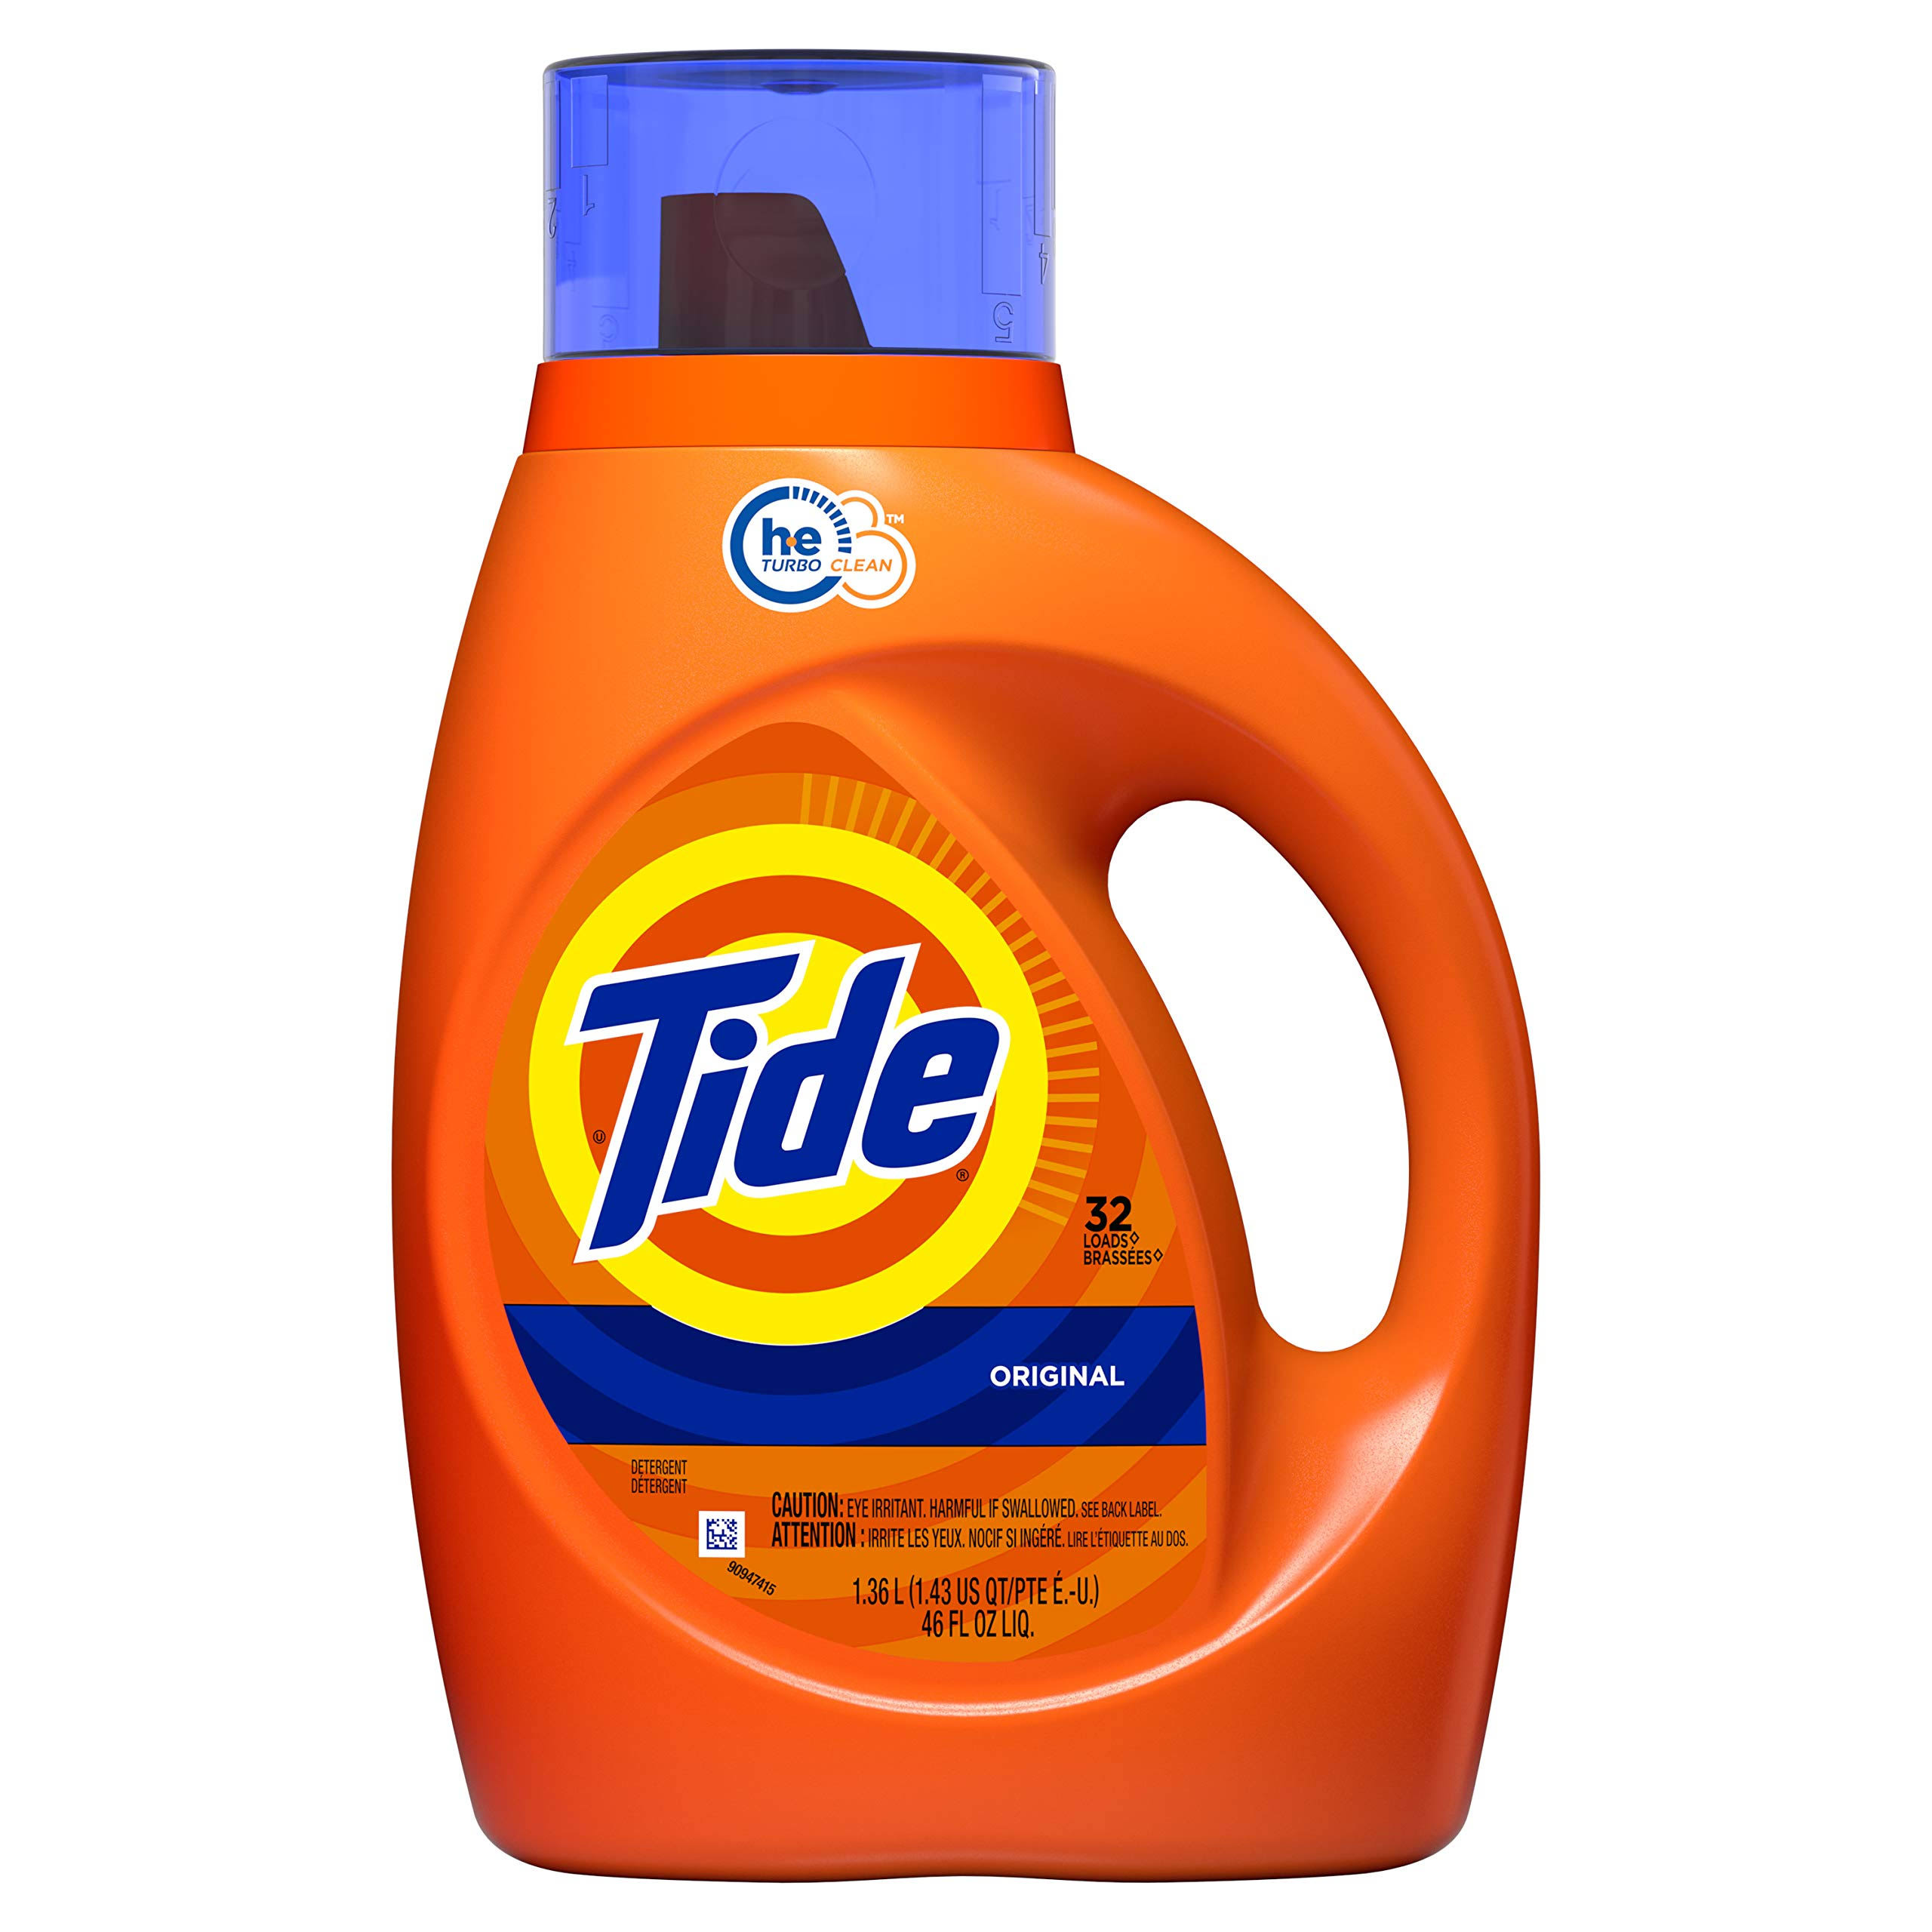 Laundry Detergent, Regular Scent, 32 Loads, 46-oz. Liquid -40213 Tide